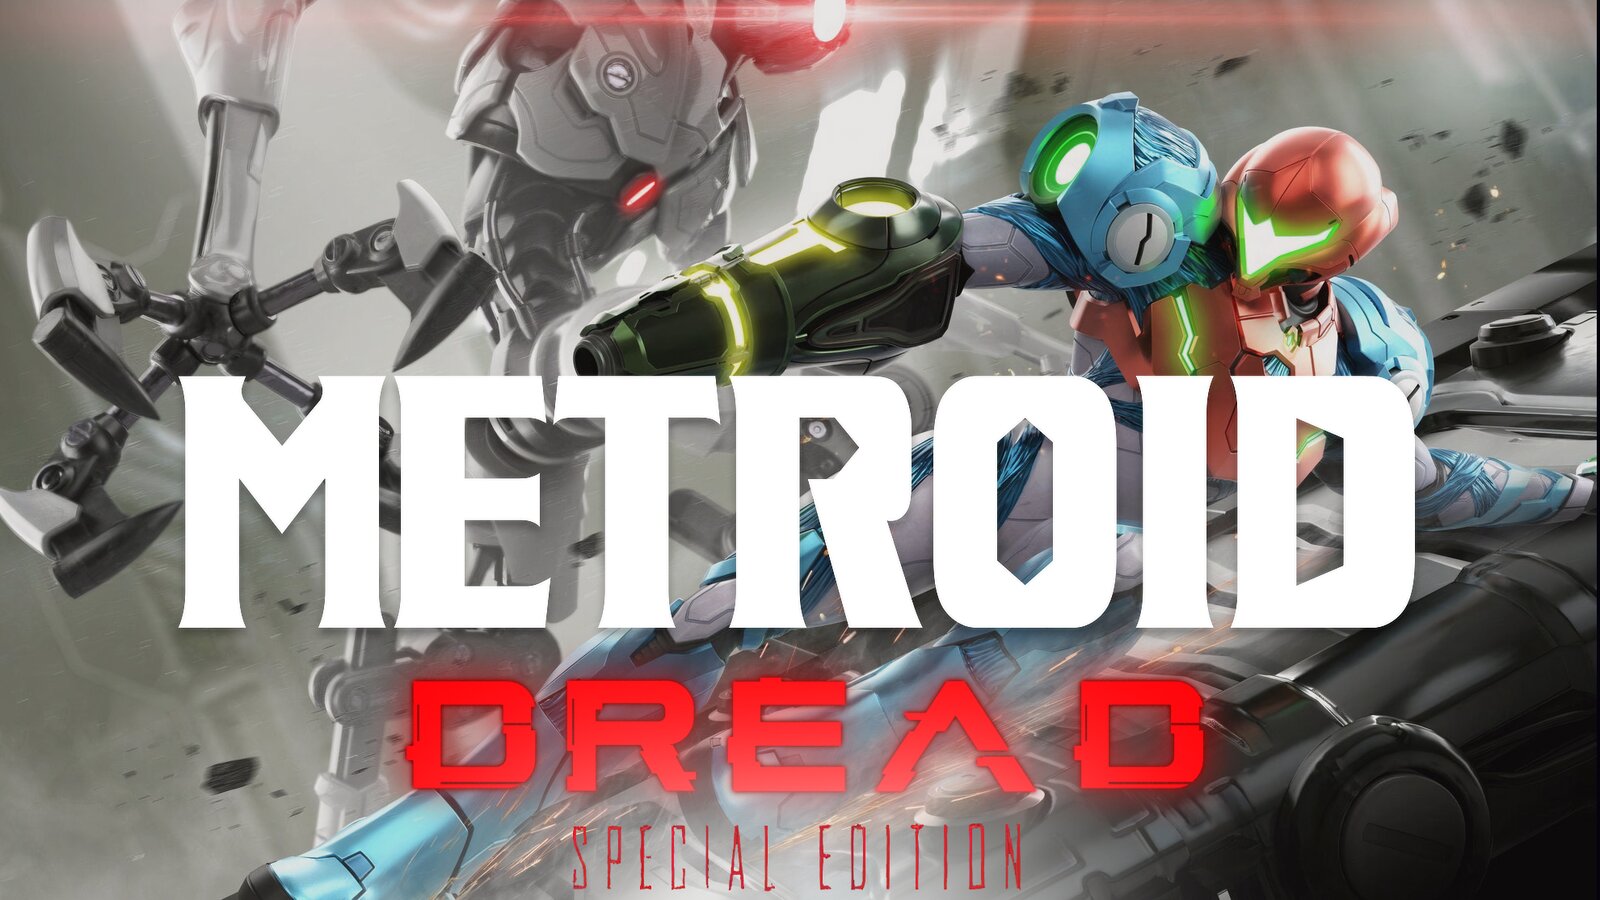 Metroid Dread - Special Edition